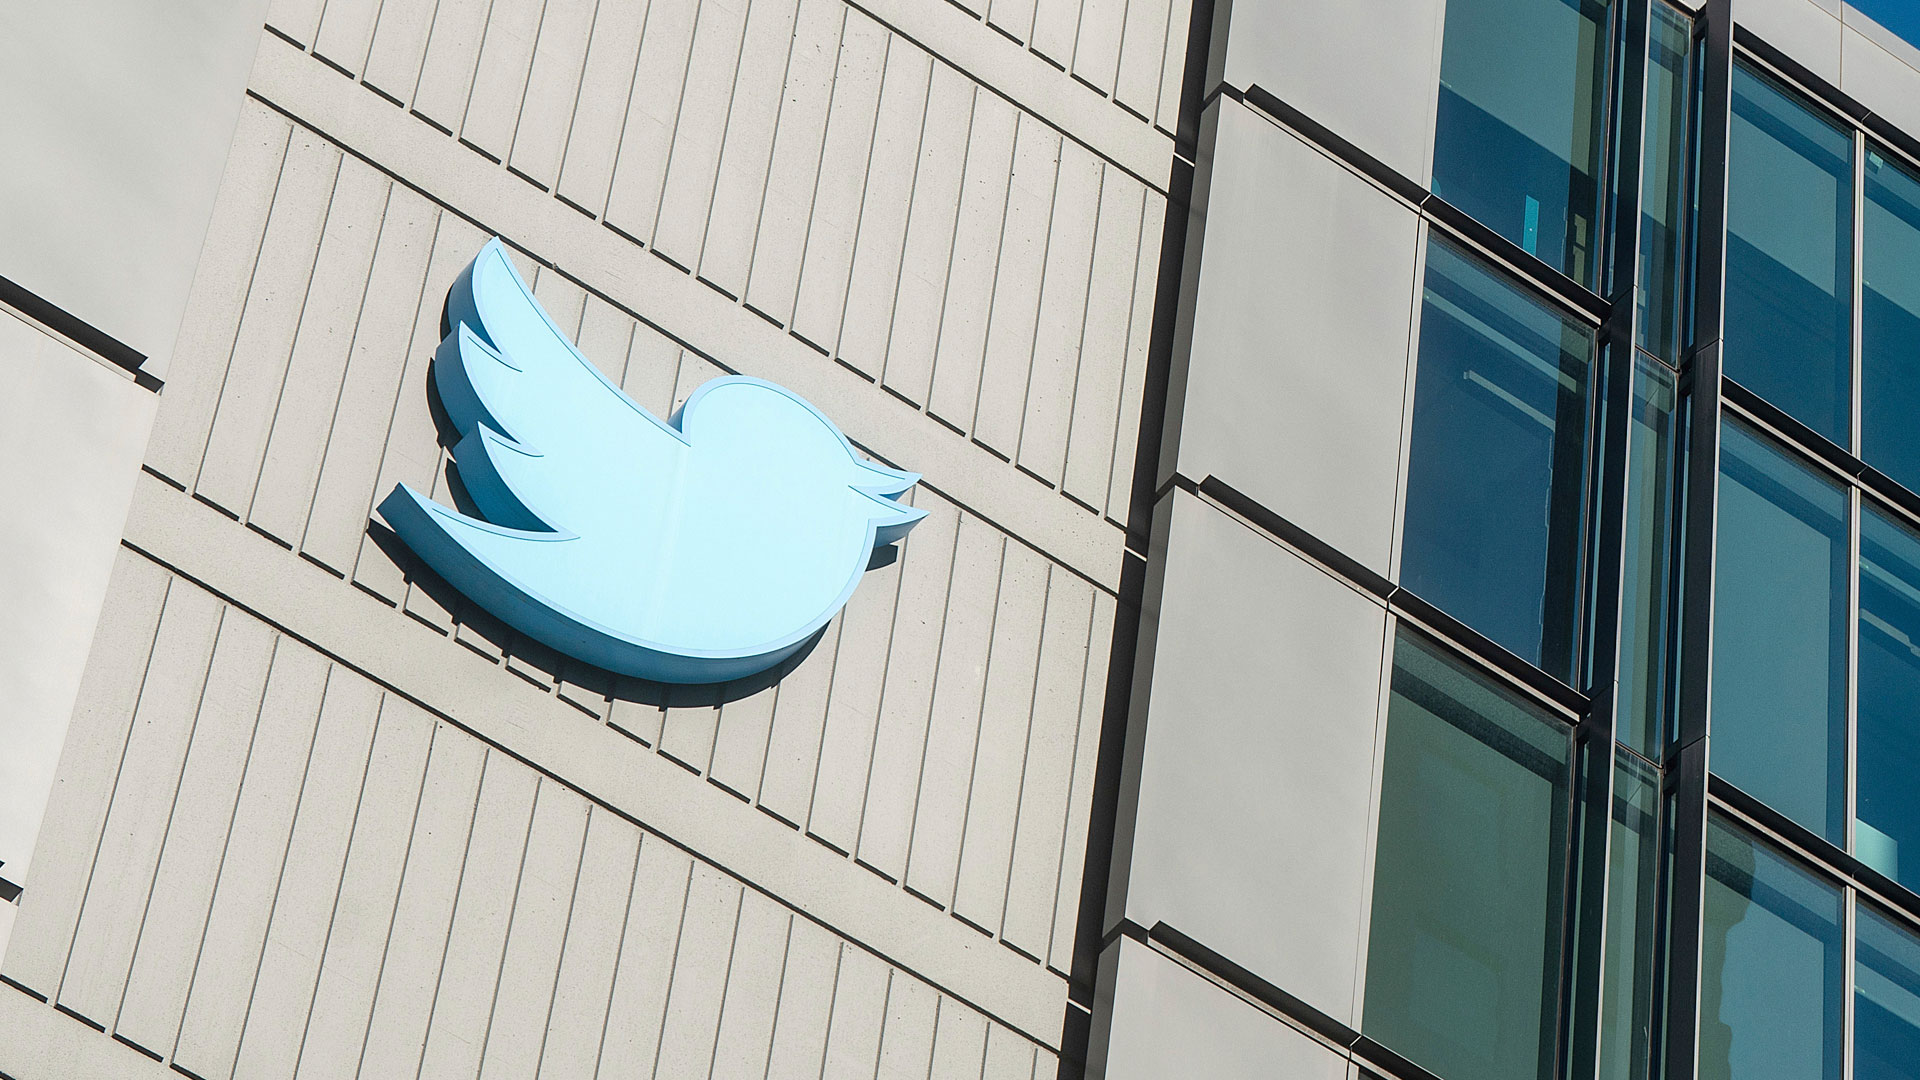 Puluhan ribu pengguna terpengaruh: berjam-jam kegagalan di Twitter